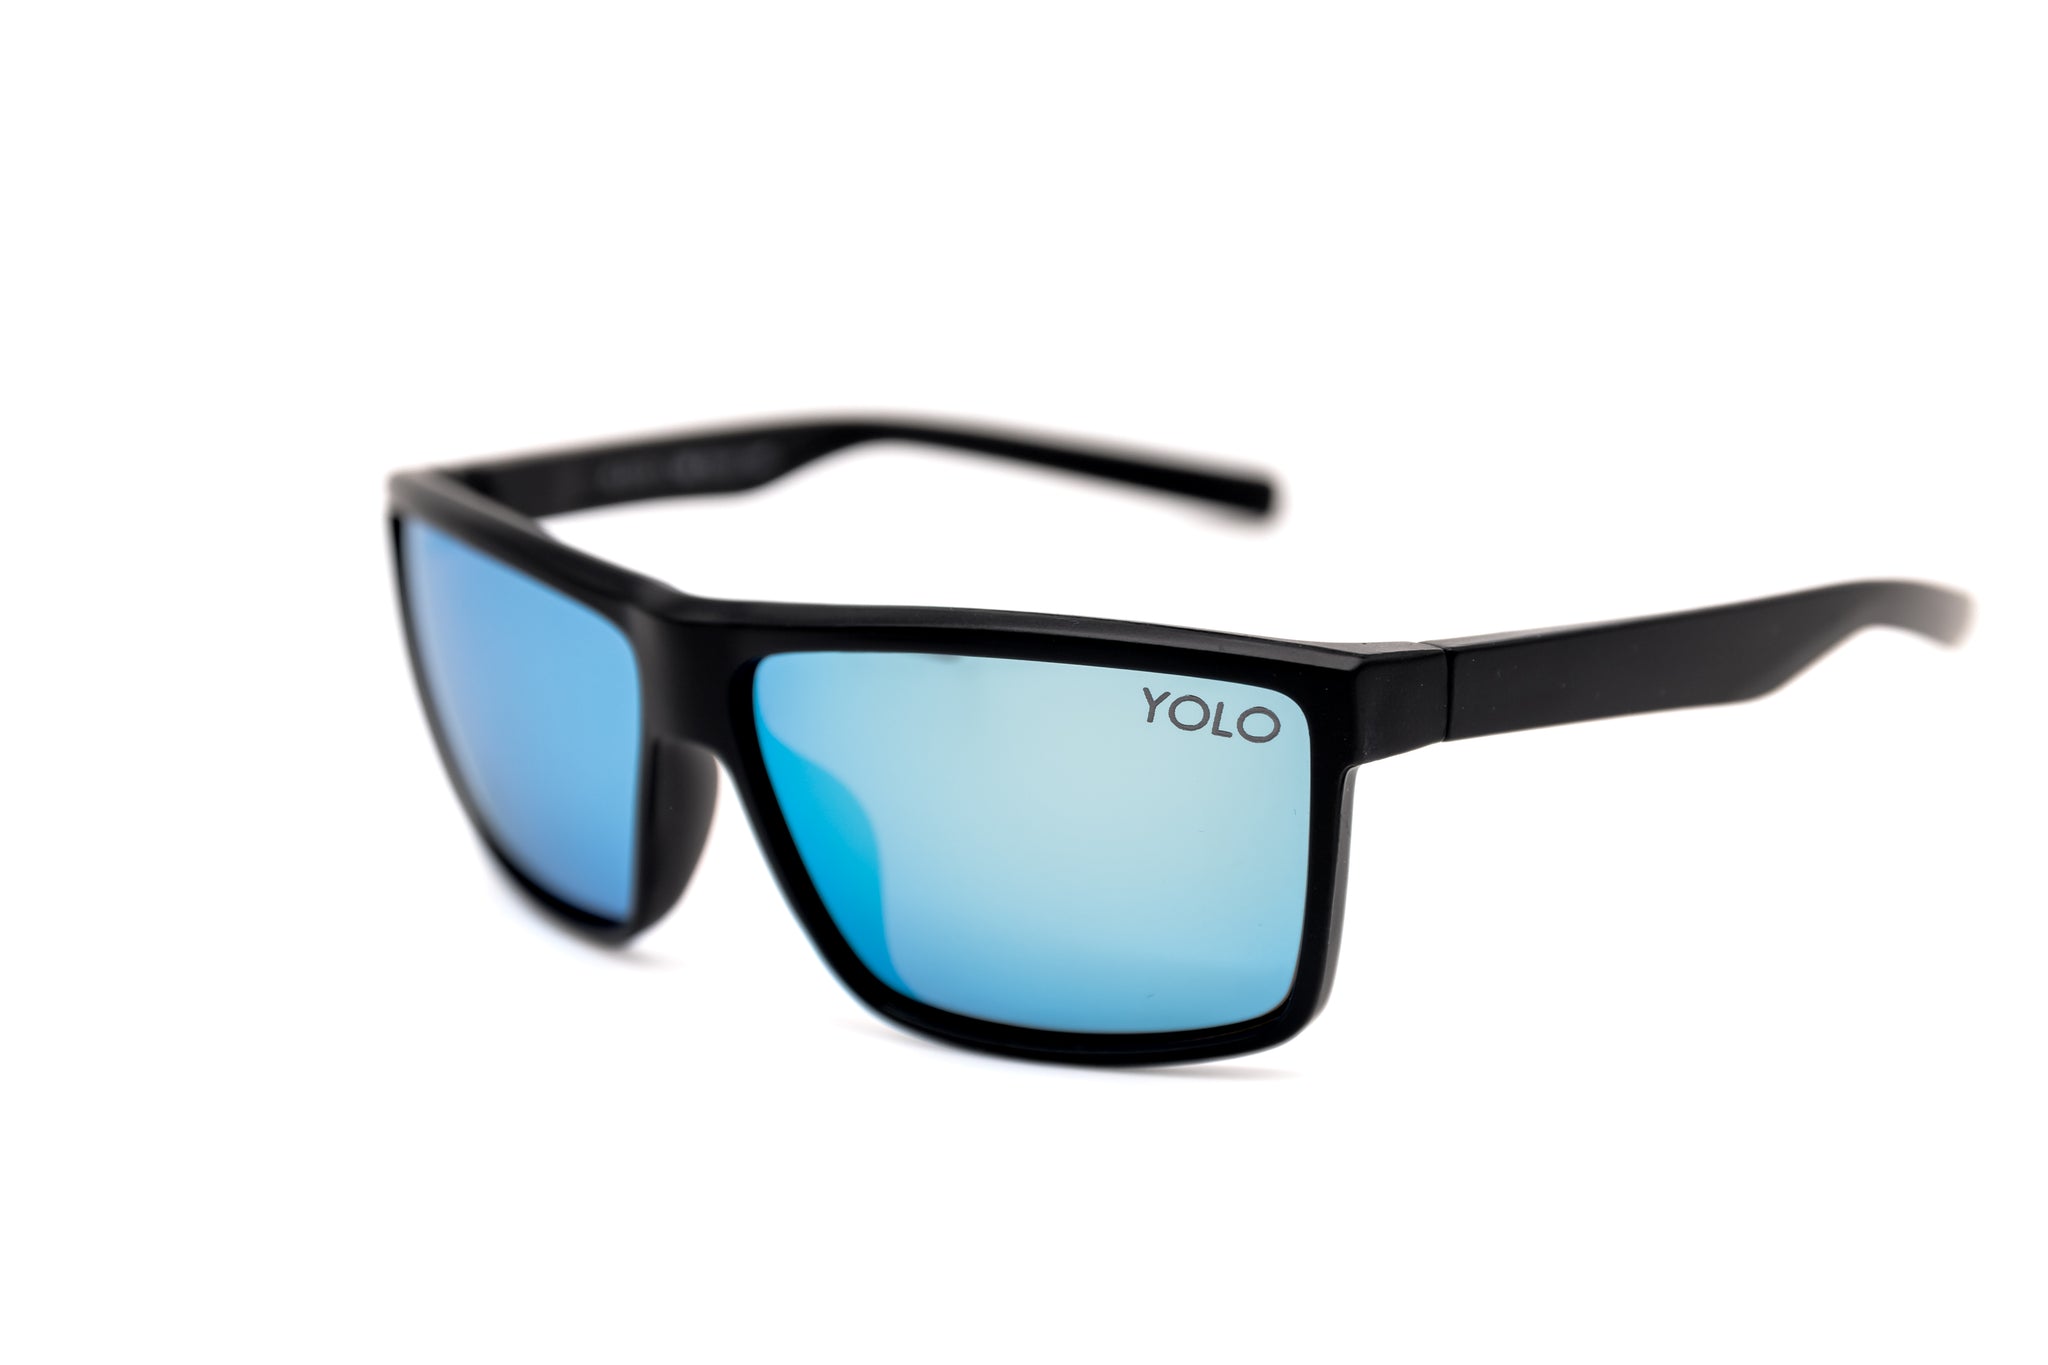 Polarized Sport Sunglasses - Yolo Eyewear Silver Mirrored Lens with Black Frame